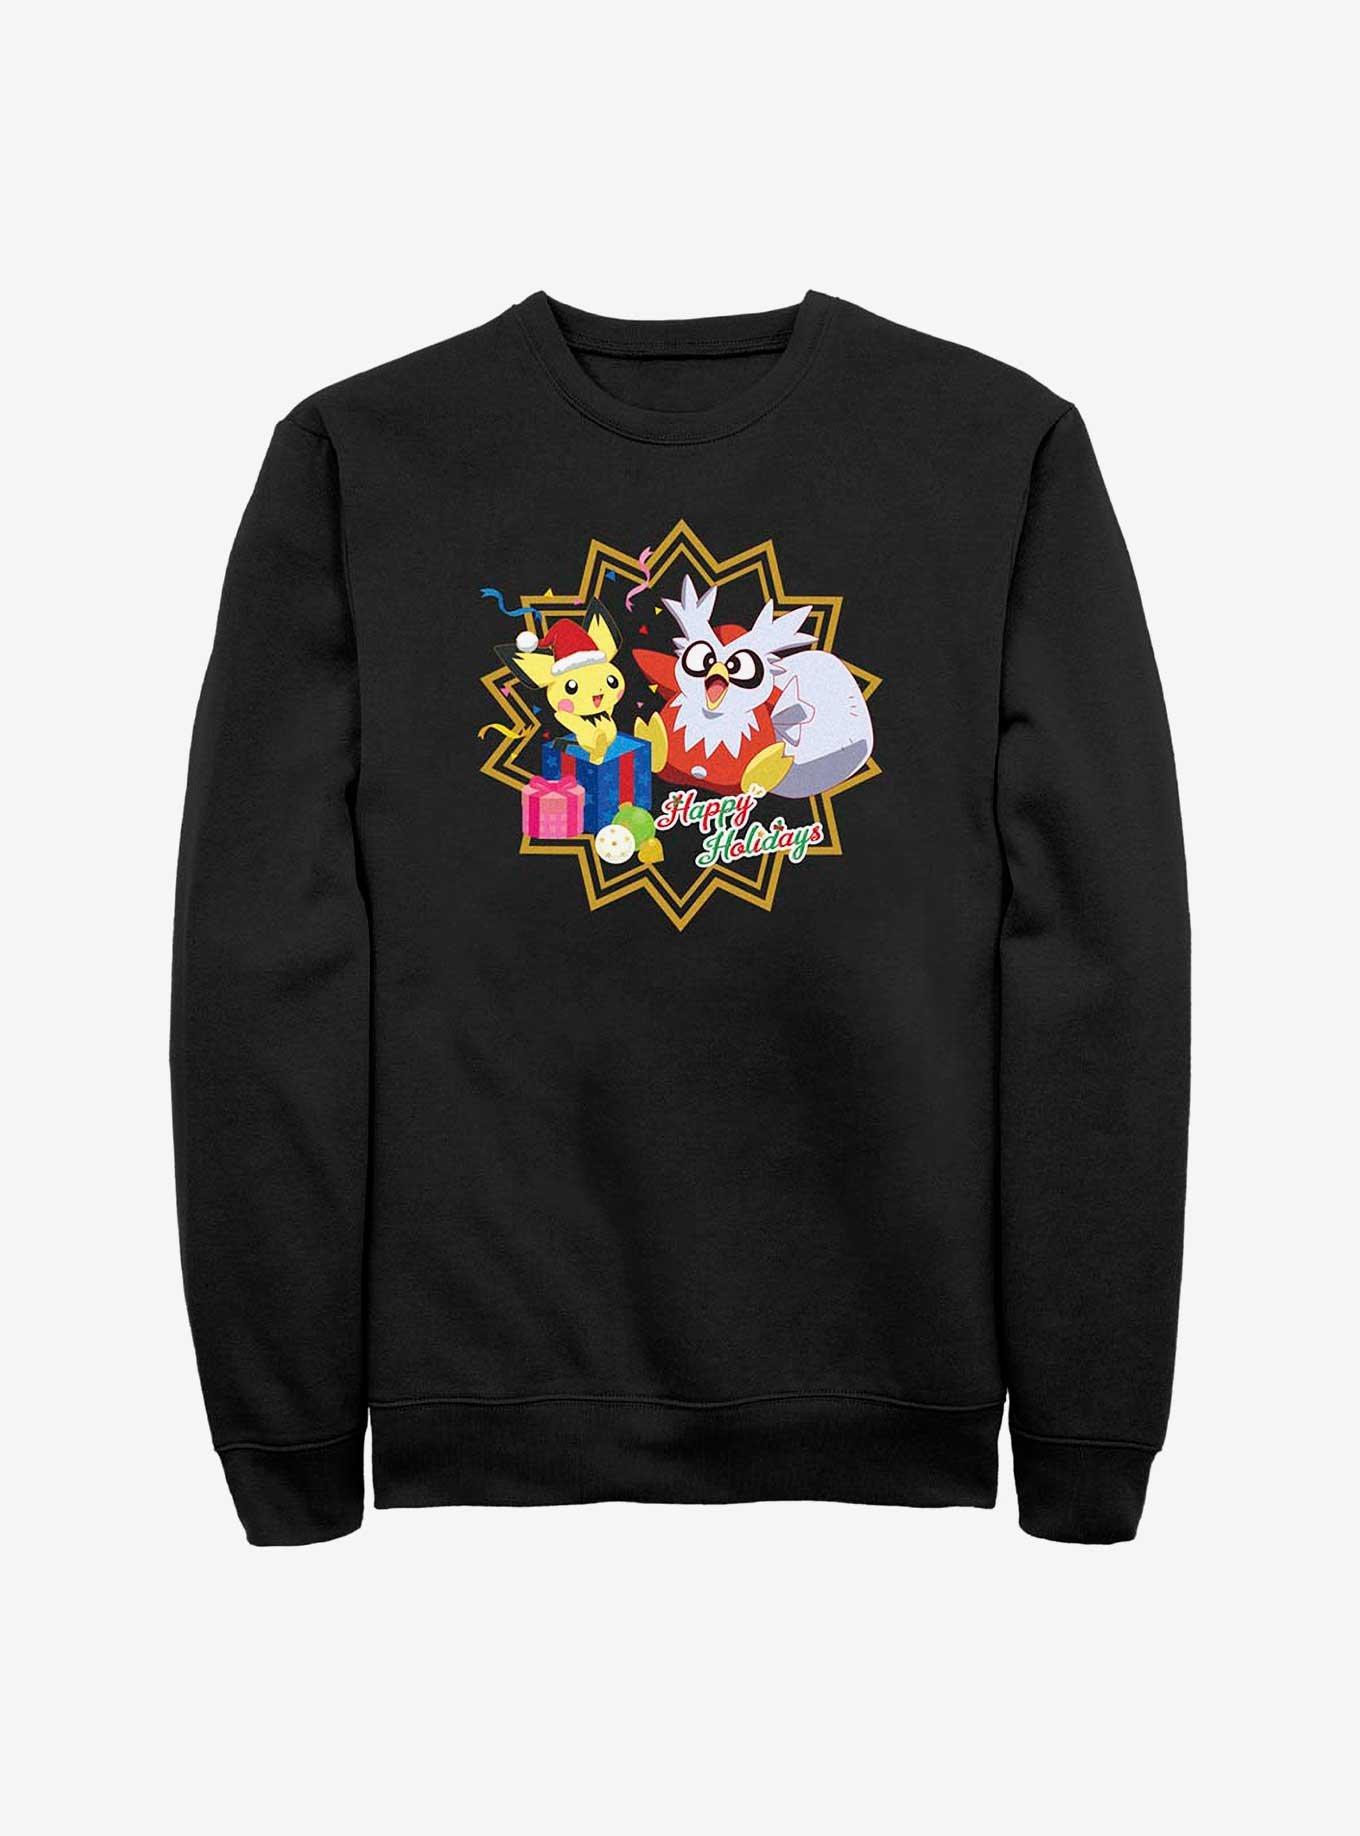 Pokémon Pichu And Delibird Holiday Party Sweatshirt, , hi-res